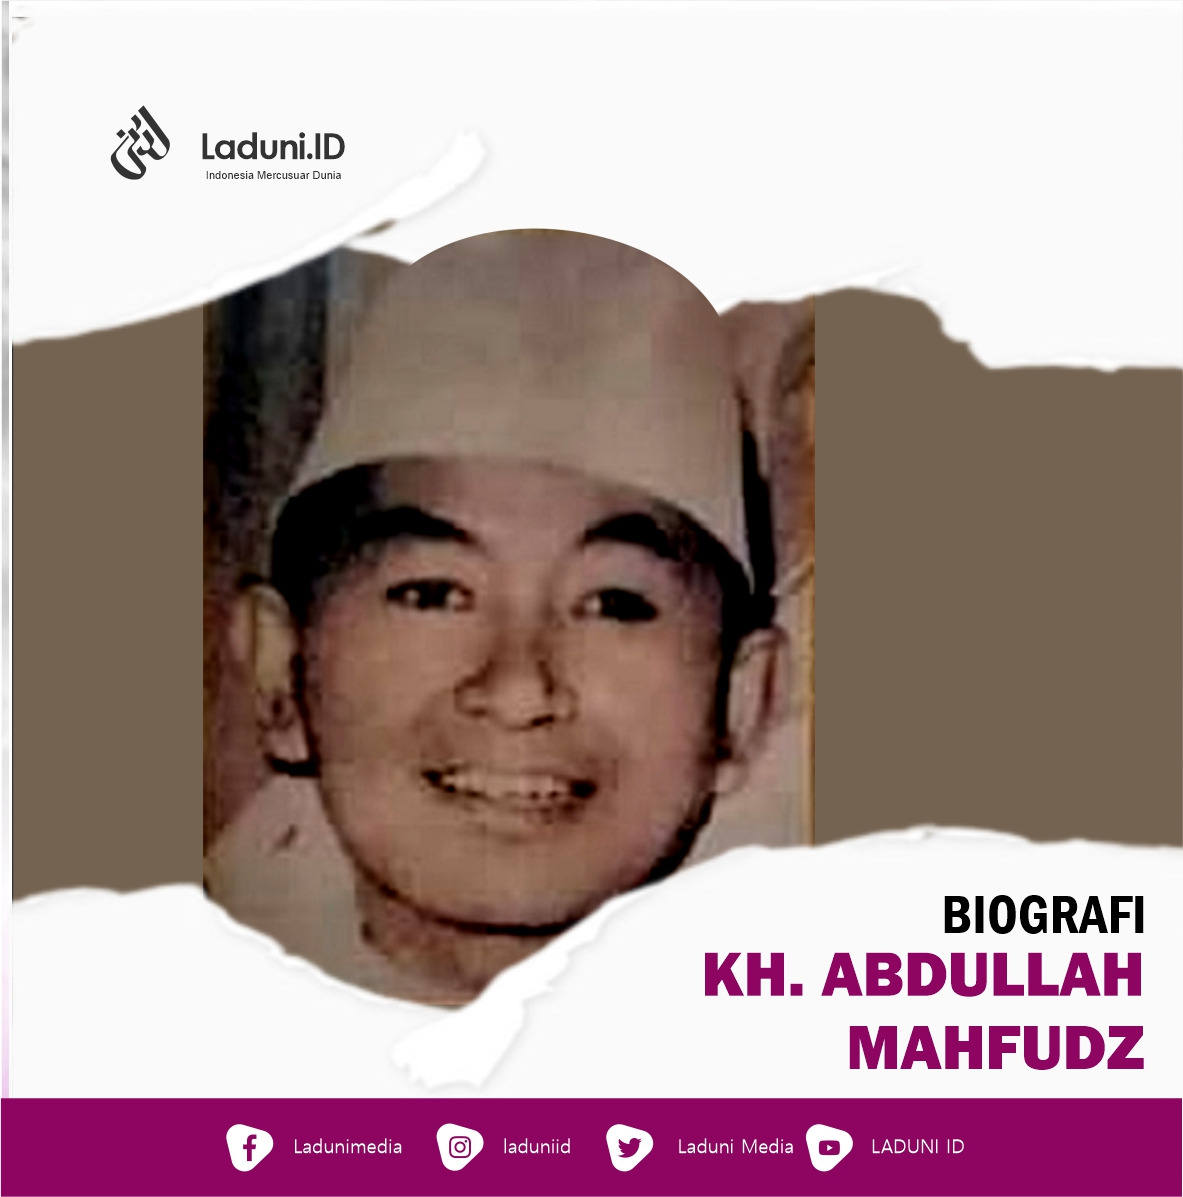 Biografi KH. Abdullah Mahfudz